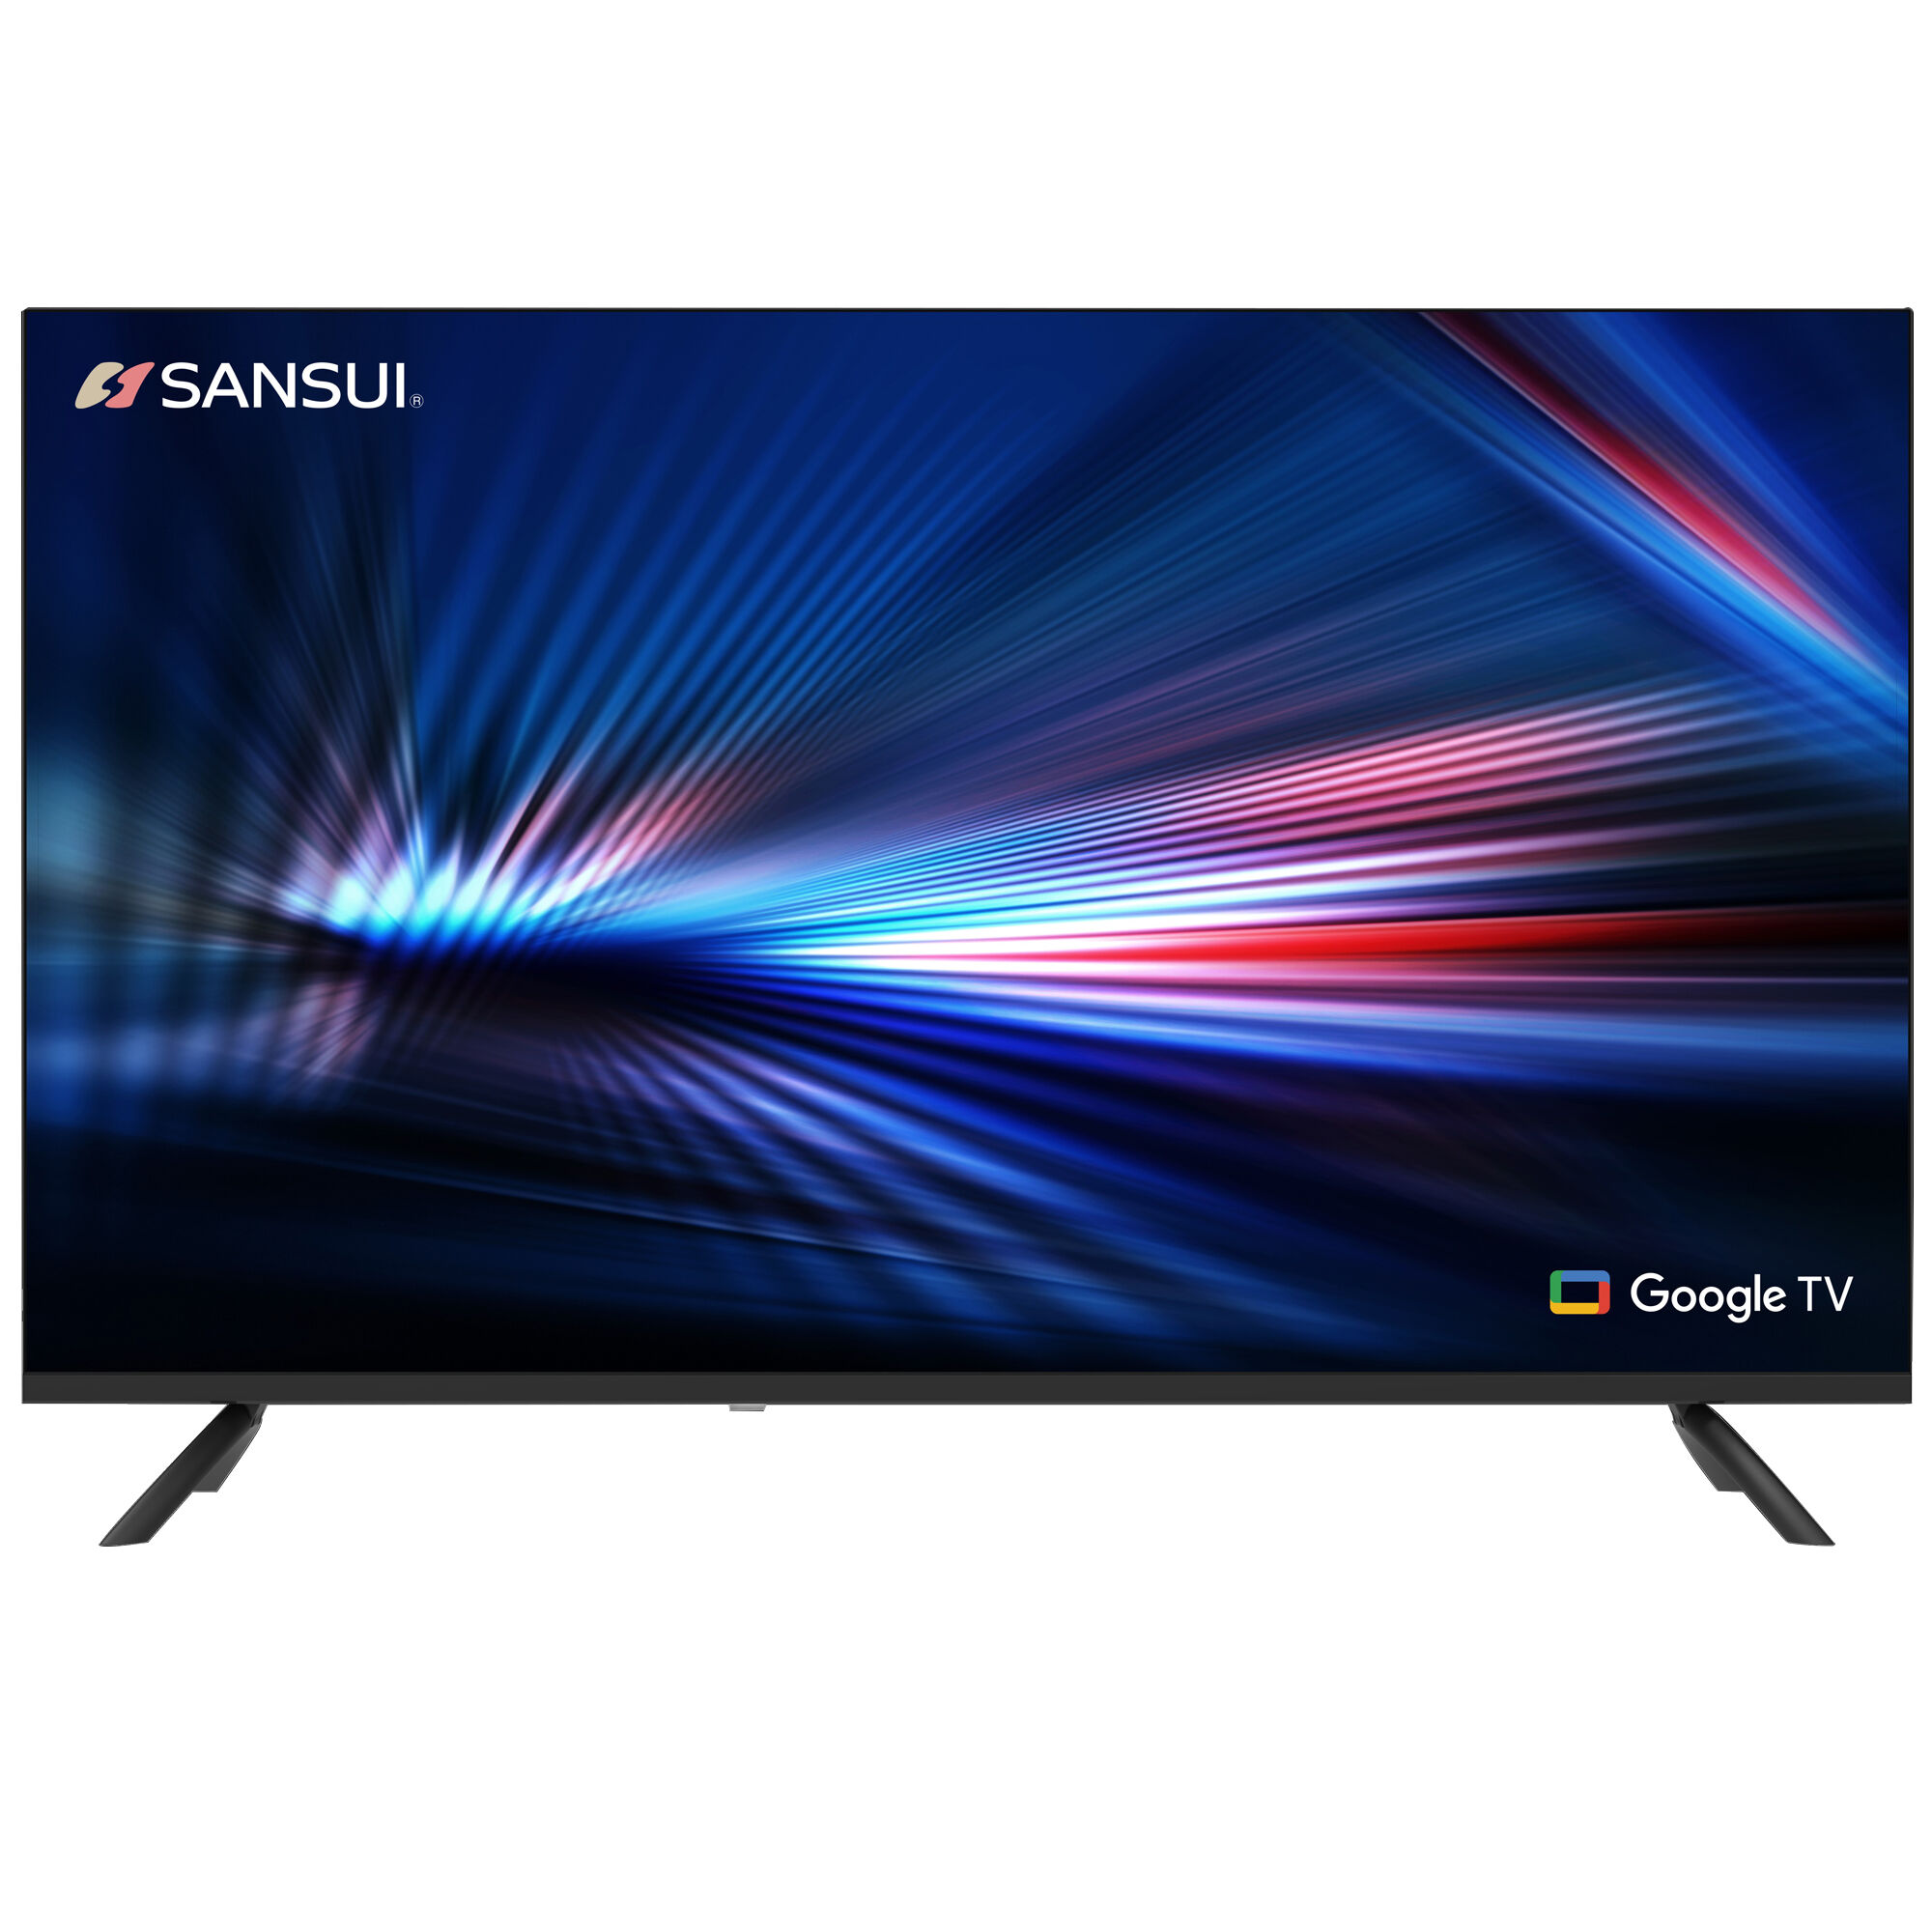 Sansui - 43inch Class LED 4K UHD Smart Google TV